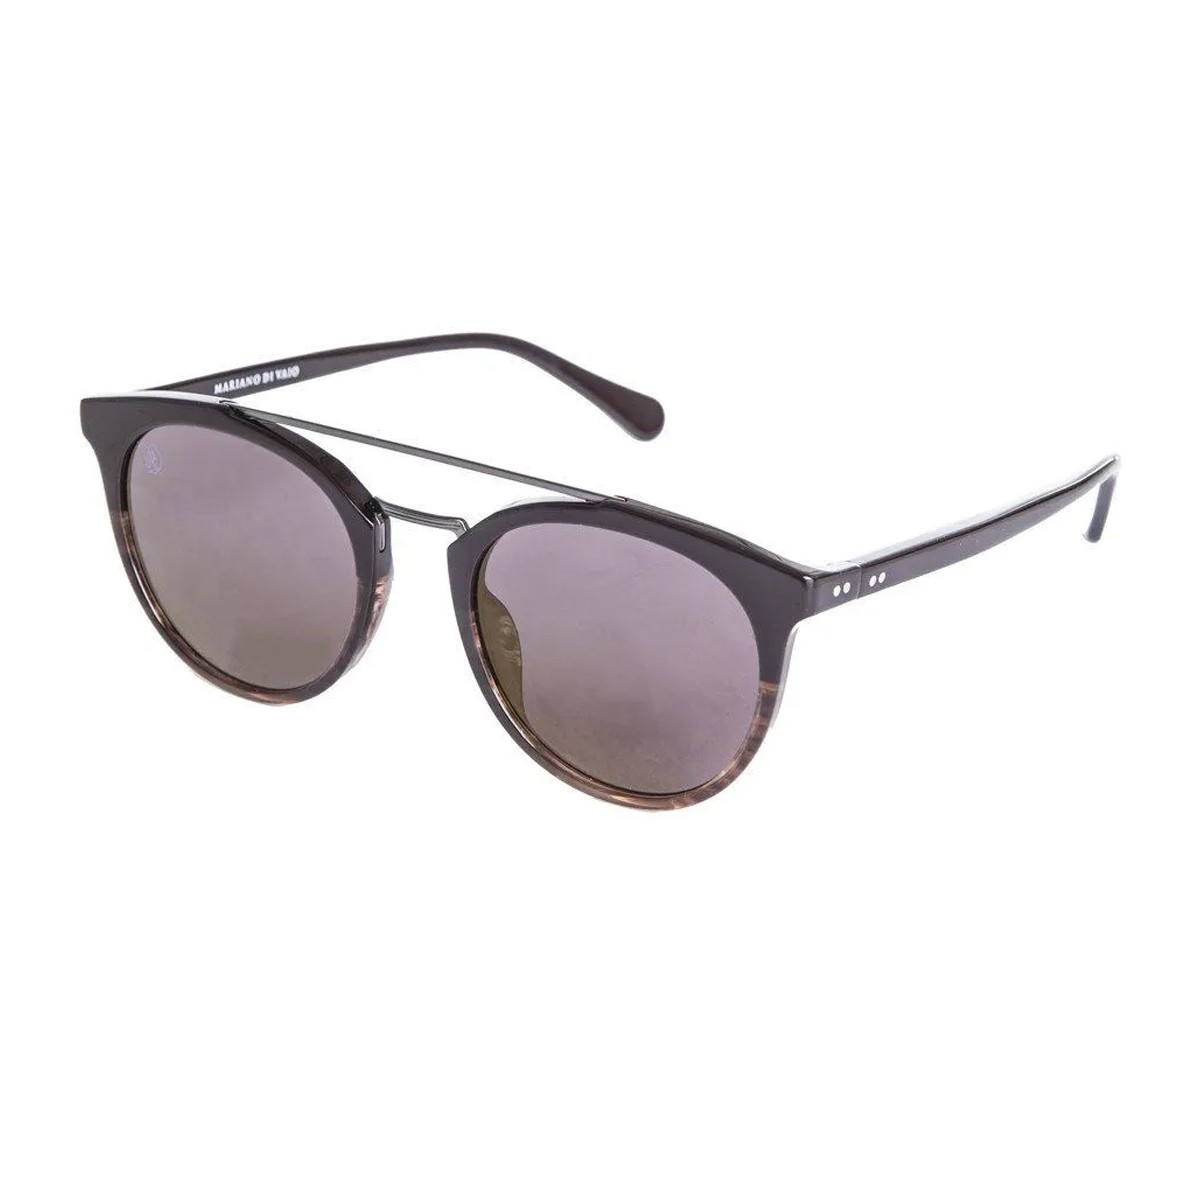 MD501 | Unisex sunglasses